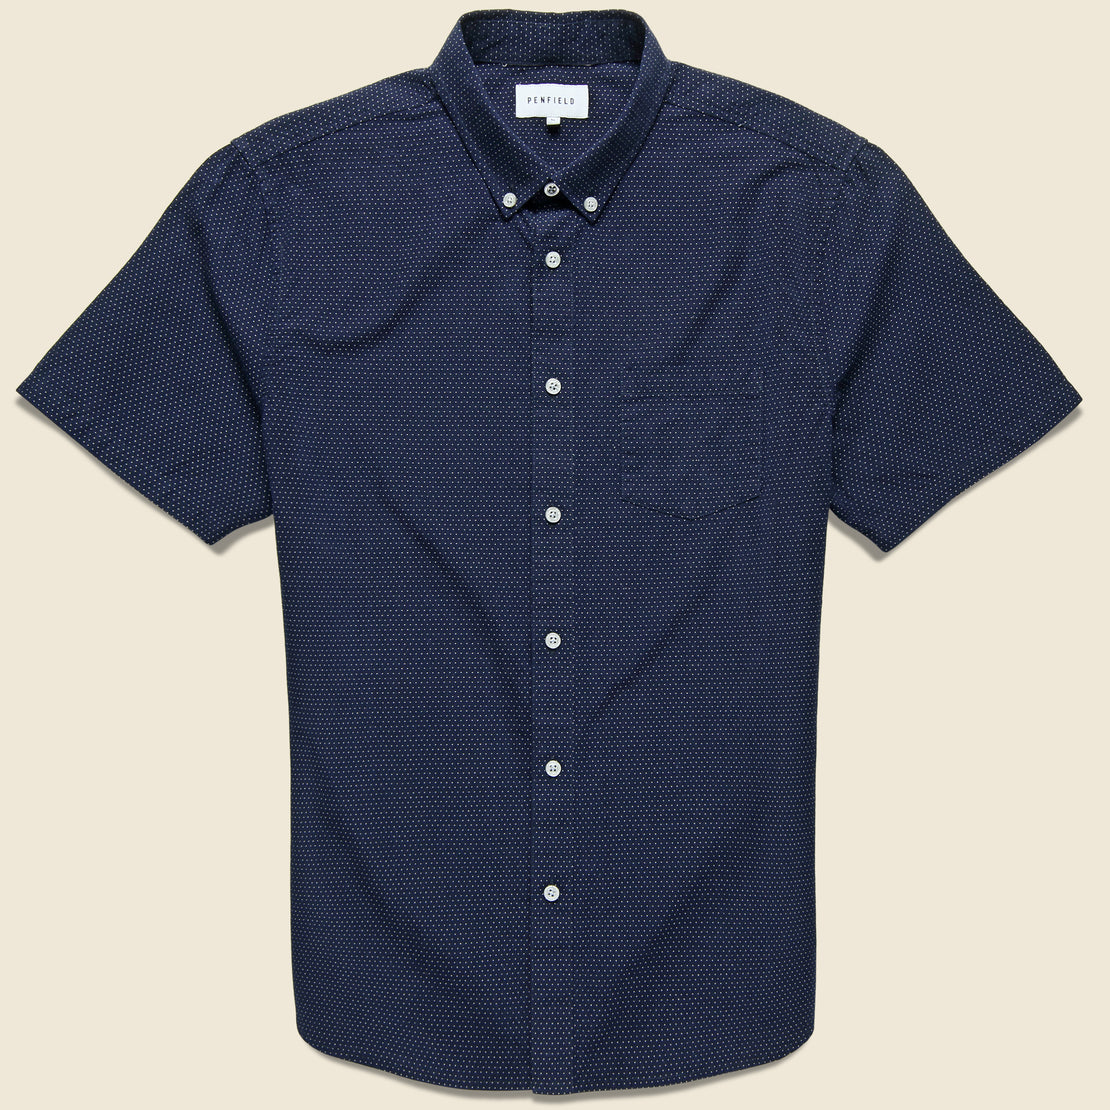 Penfield Retford Shirt - Navy